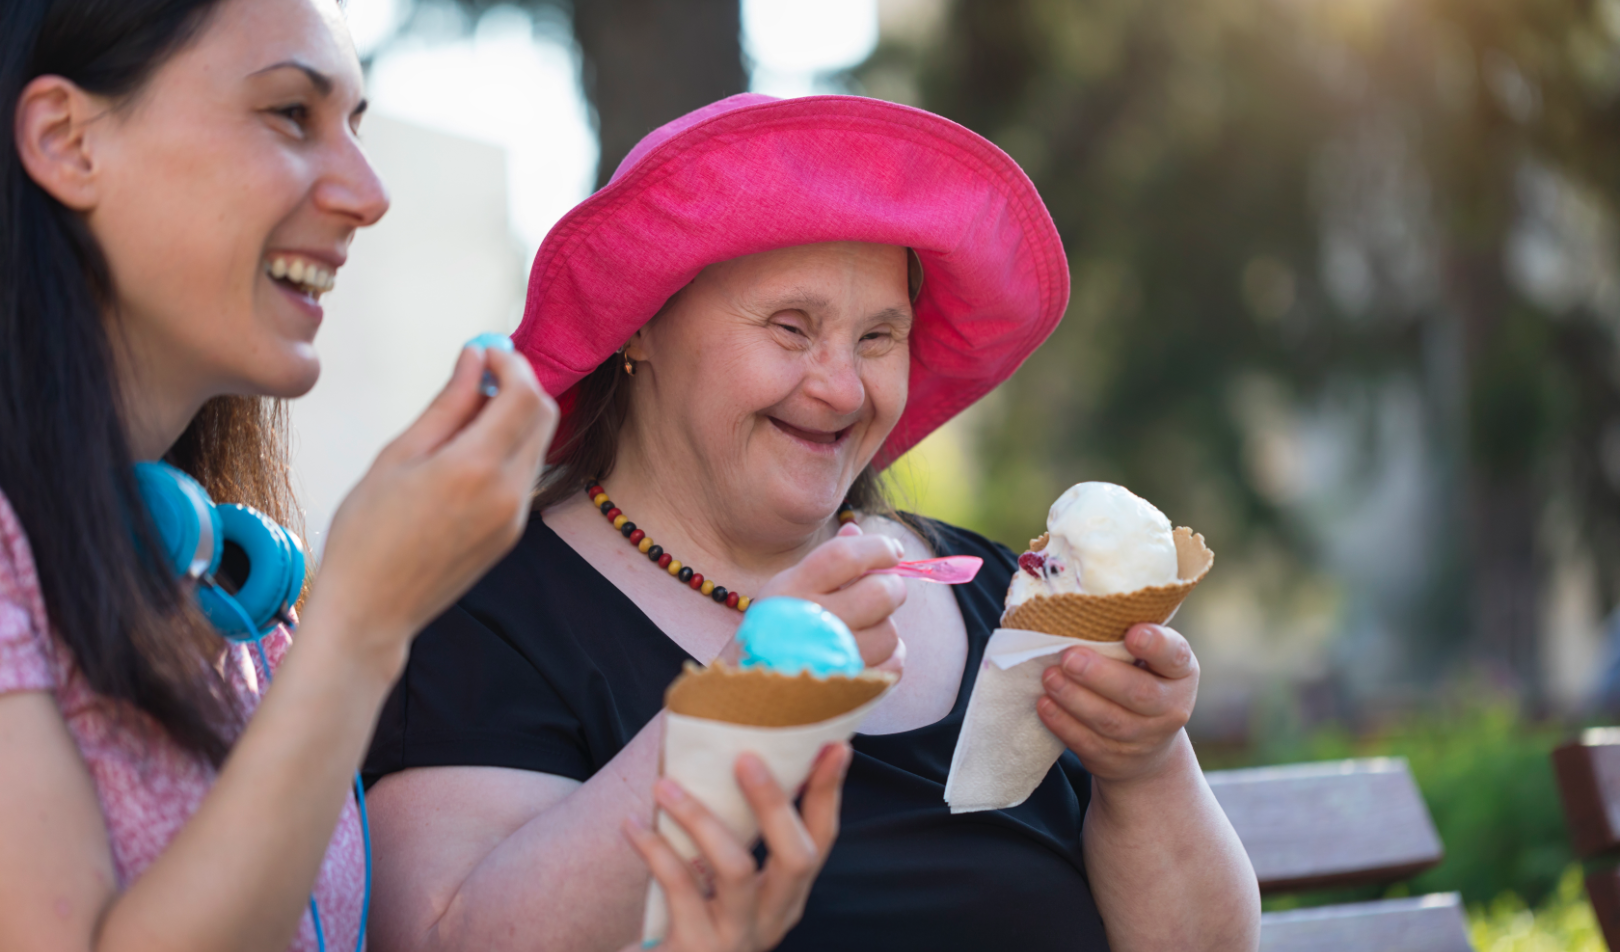 Two women enjoy ice cream